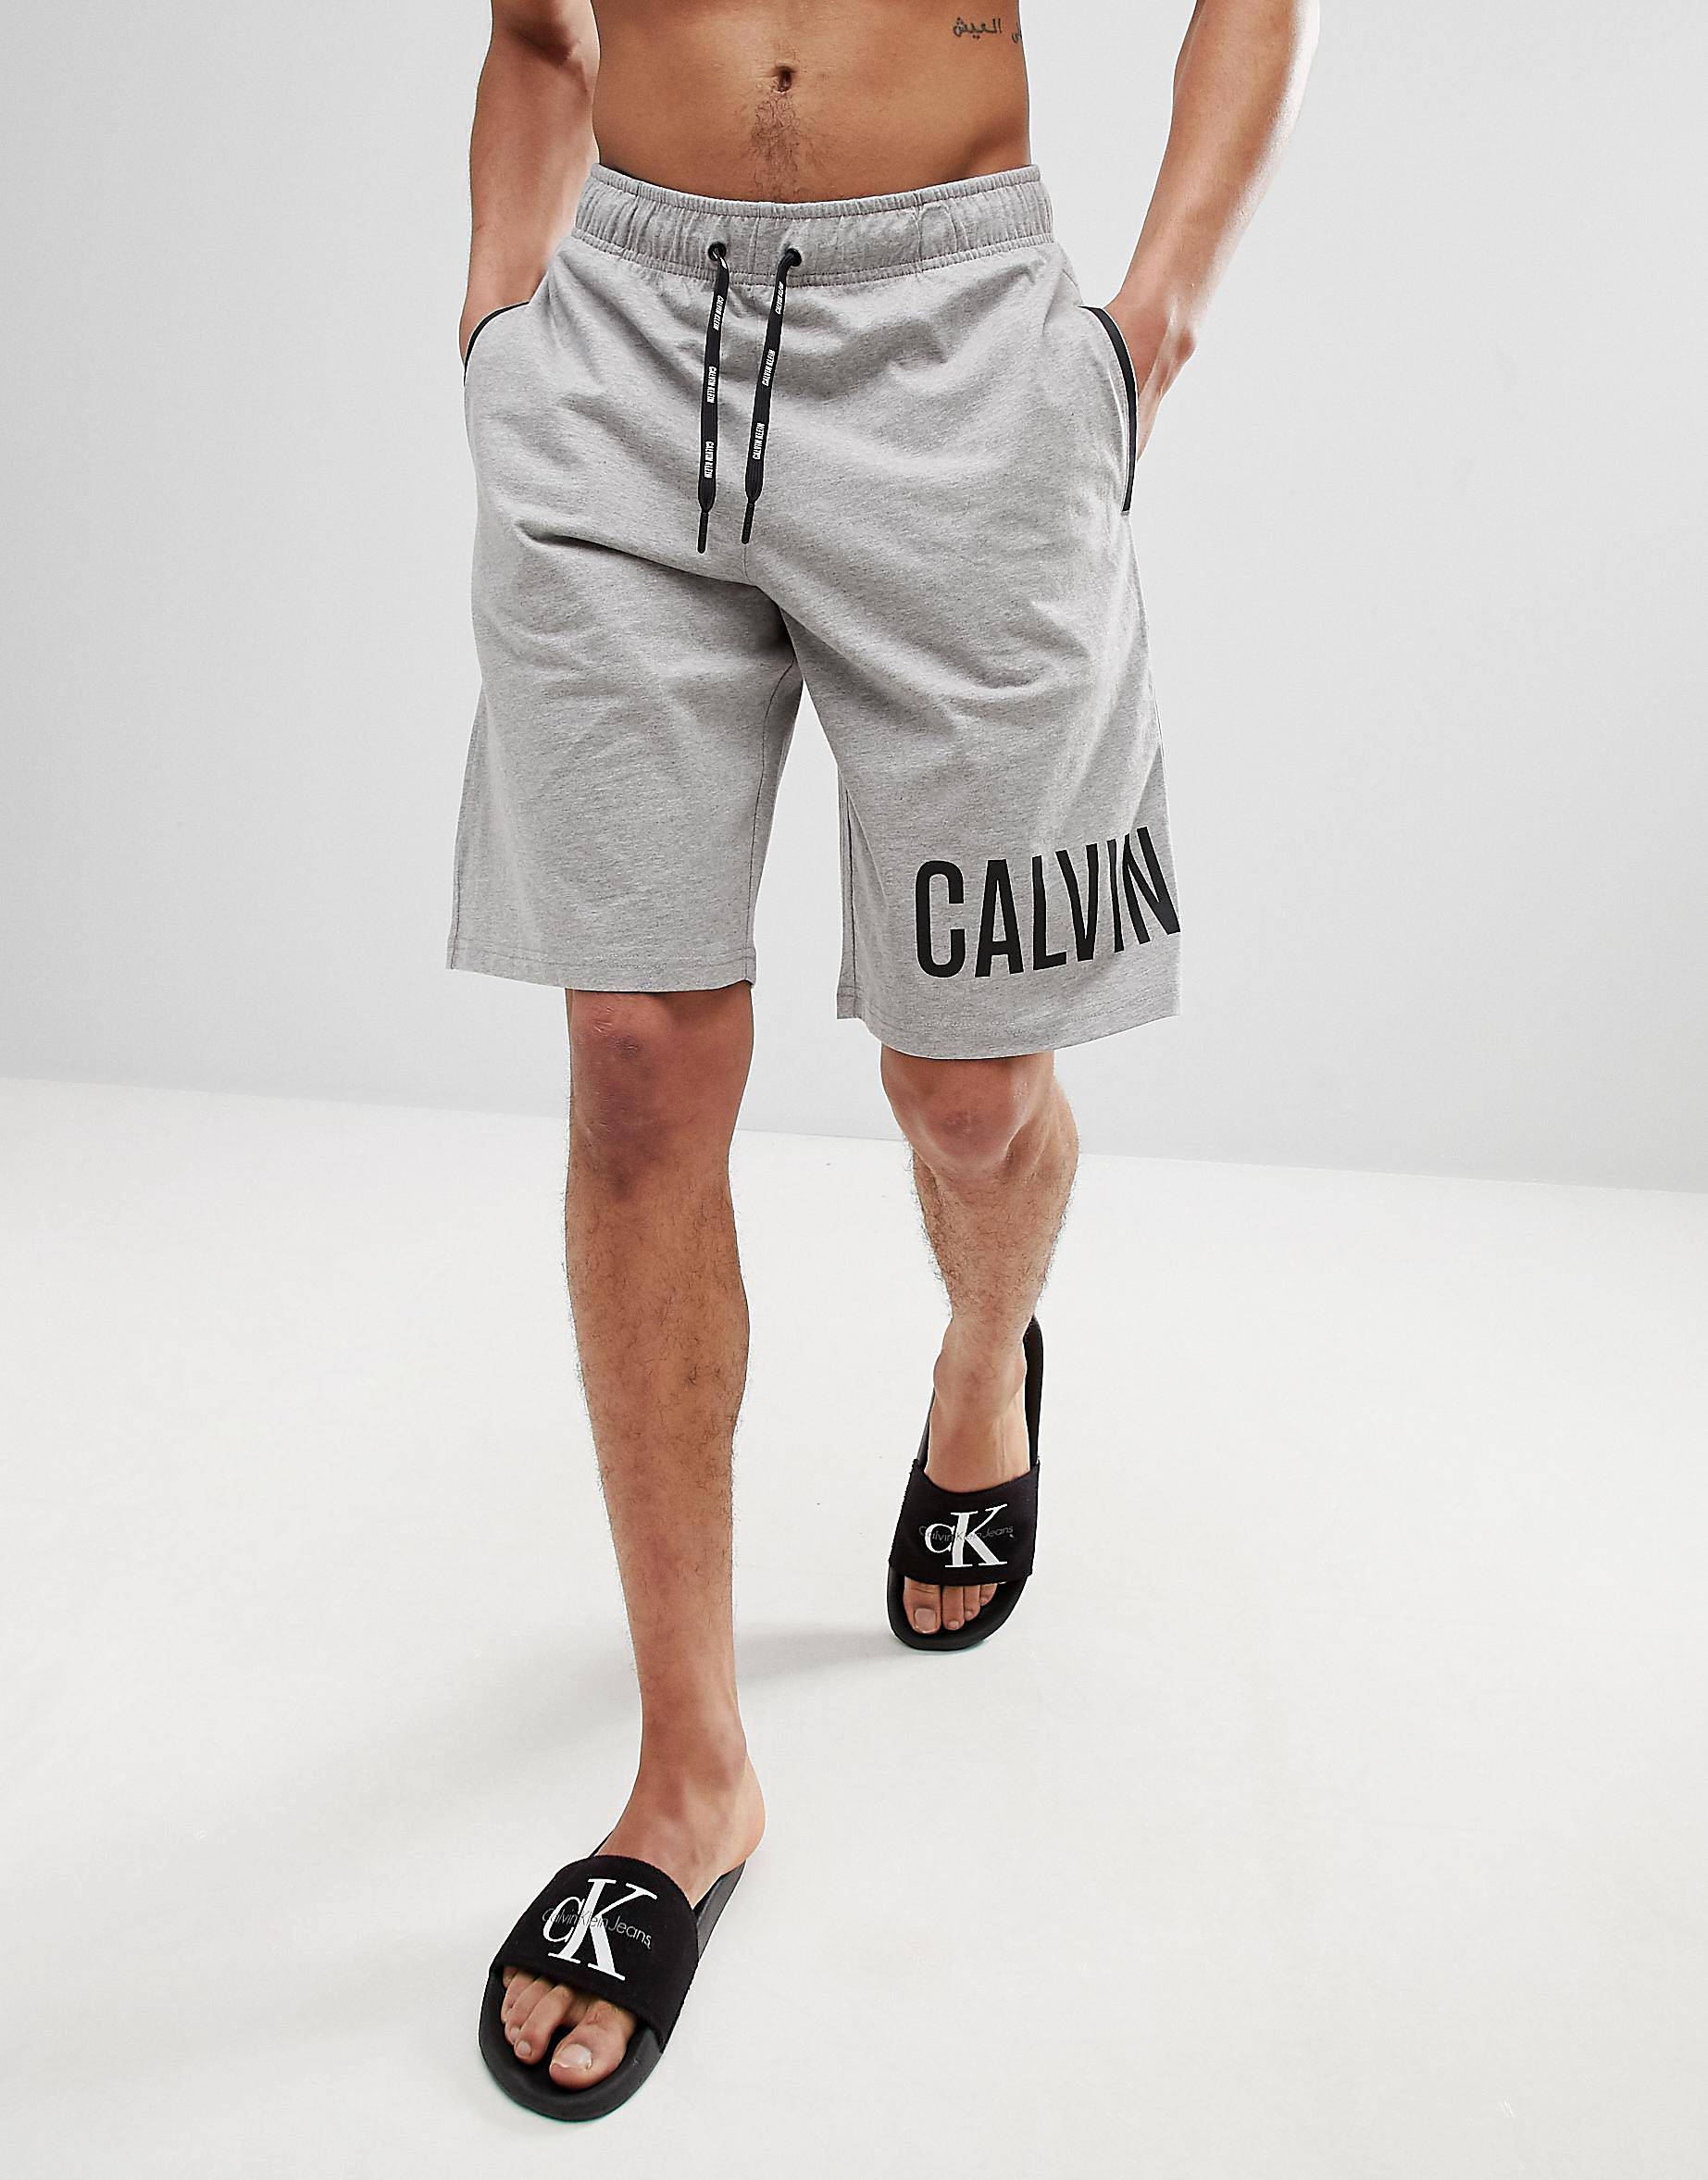 Шорты calvin. Шорты спортивные мужские Calvin Klein Jeans. Шорты Calvin Klein мужские трикотажные. Шорты Calvin Klein мужские серые. Шорты мужские оверсайз Кельвин Кляйн.